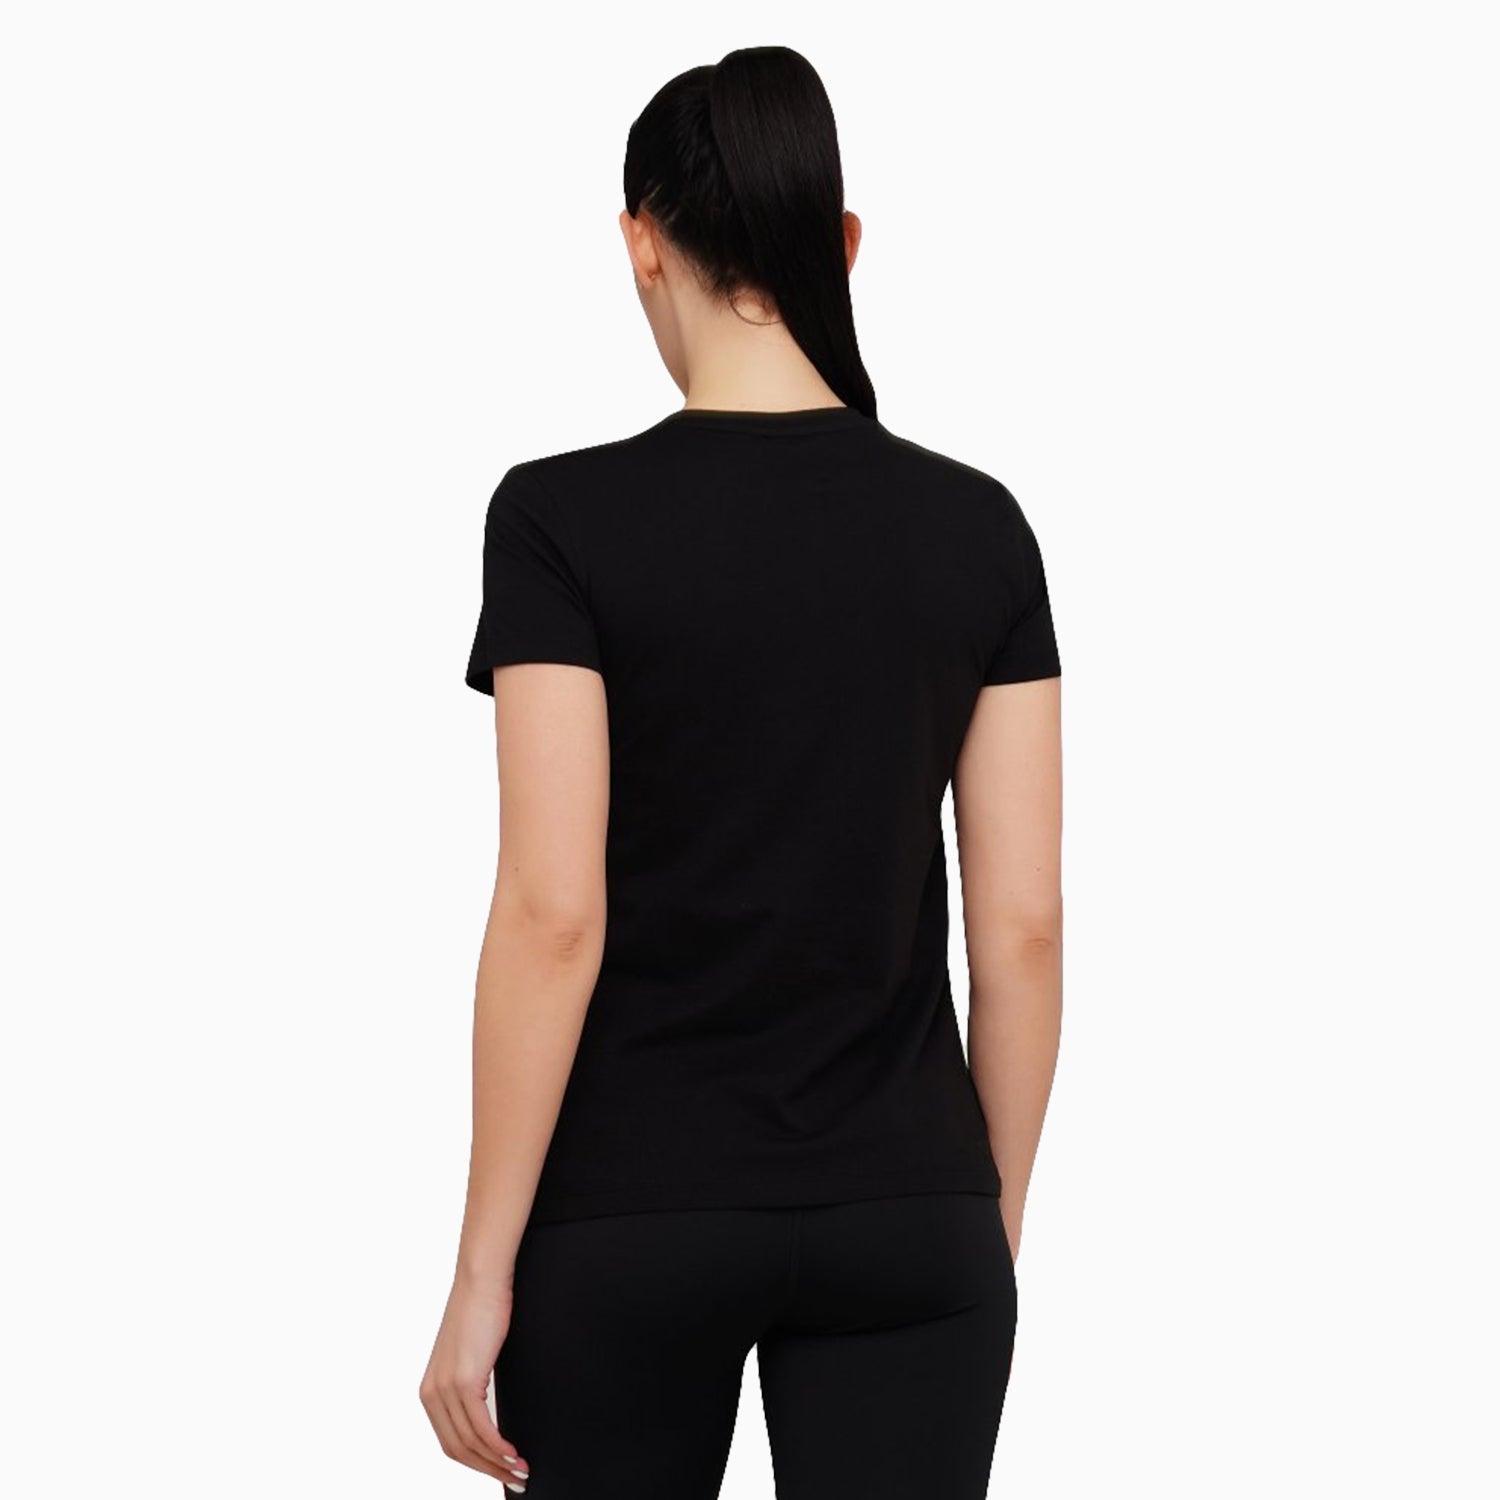 puma-womens-streetwear-graphic-t-shirt-532552-51